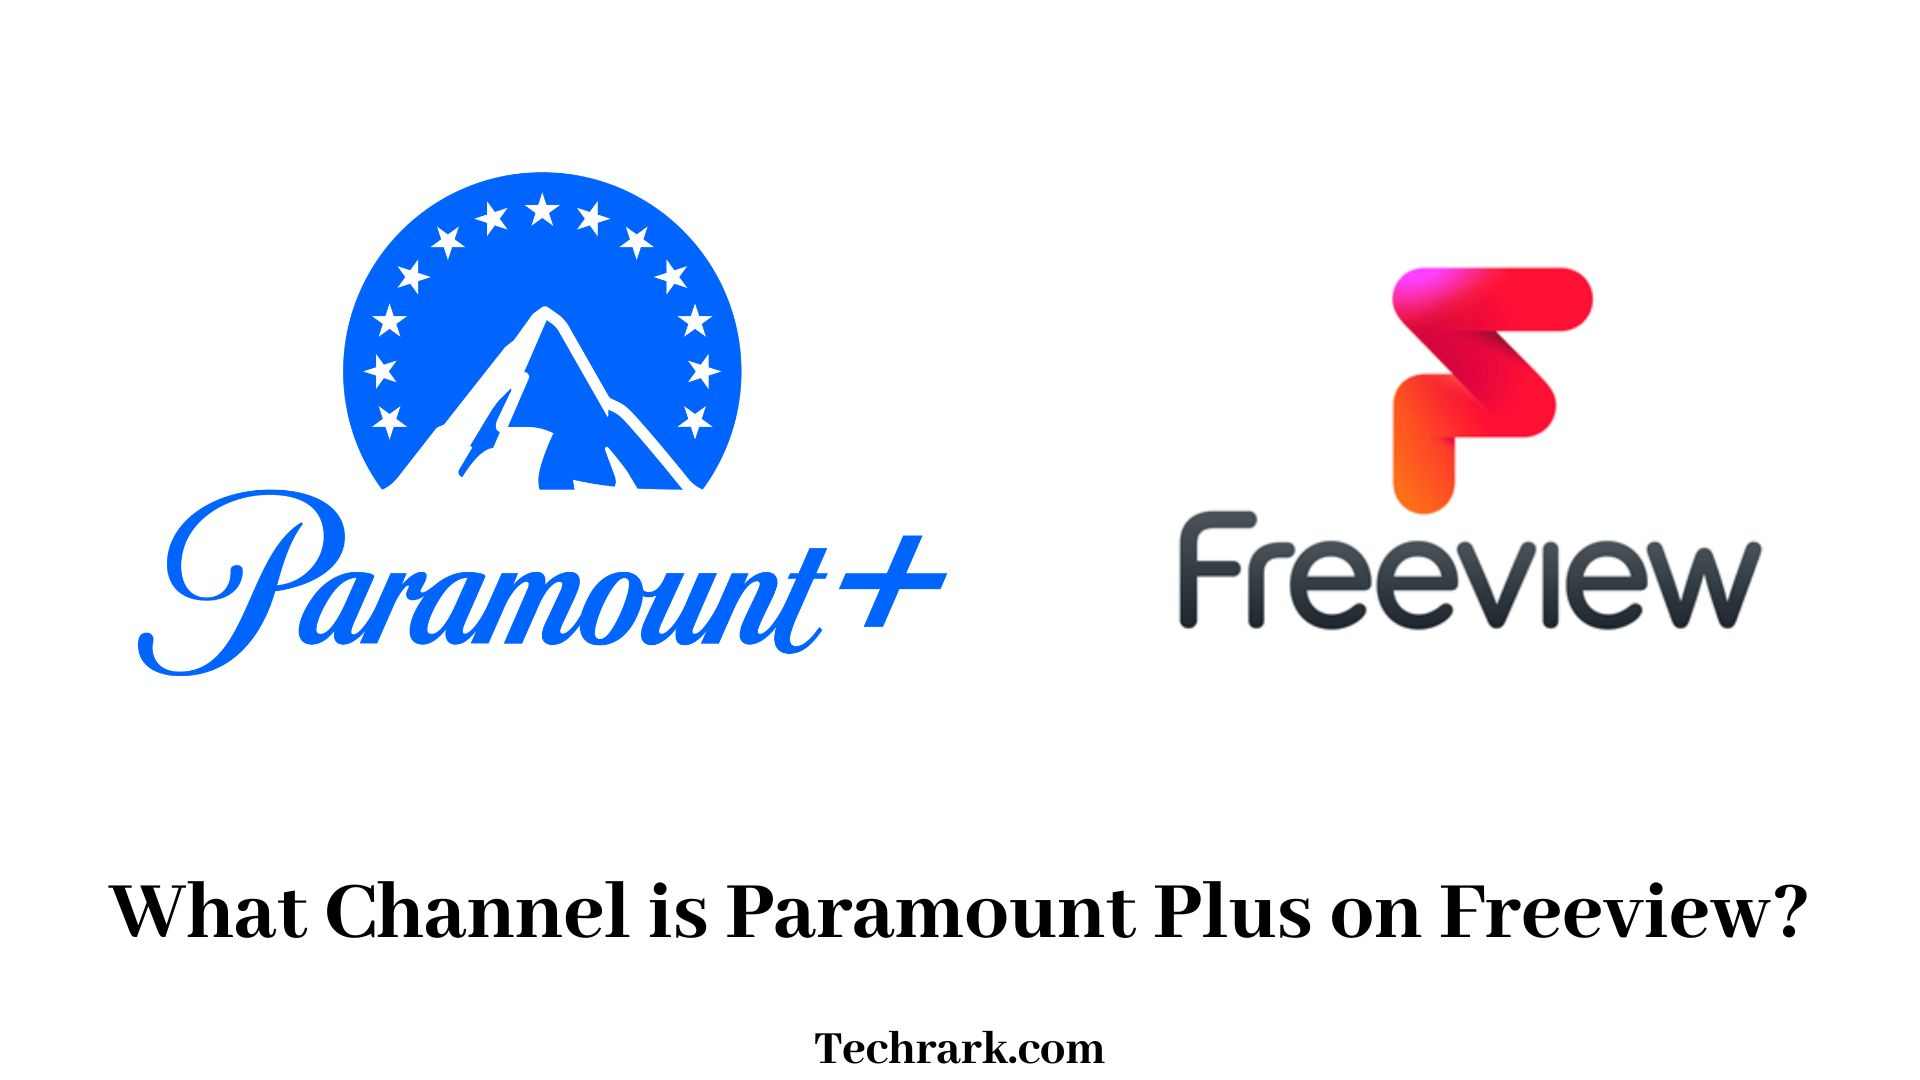 Paramount Plus on Freeview